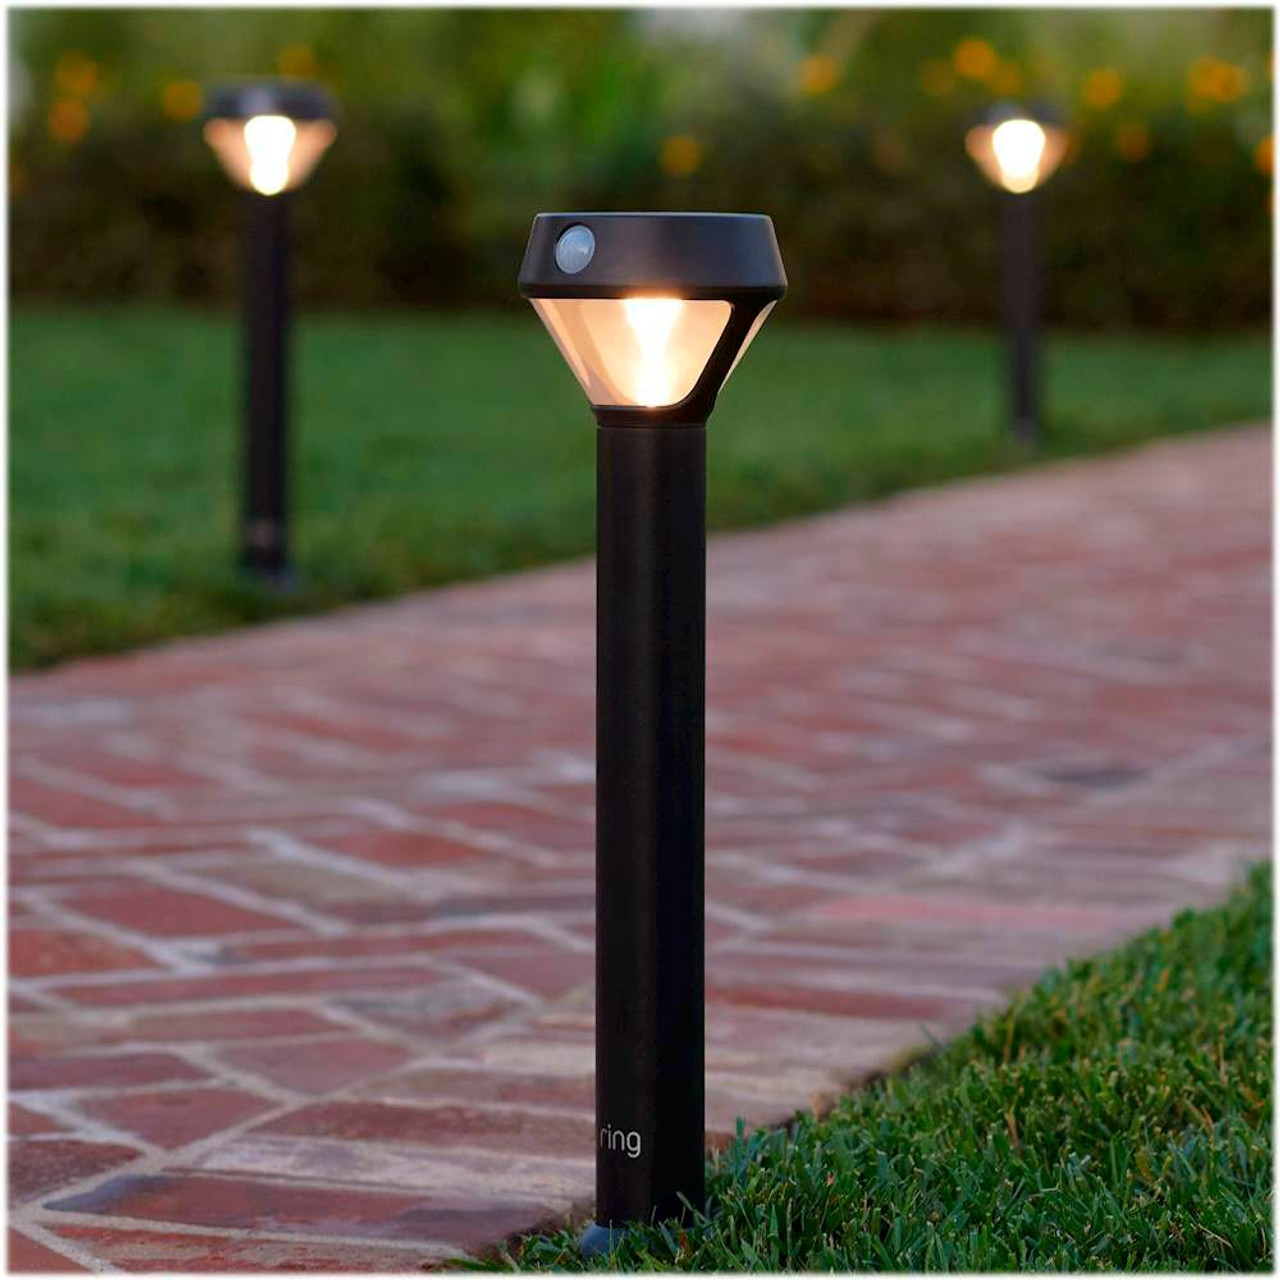 Ring - Solar Powered Smart Lighting Pathlight - Black